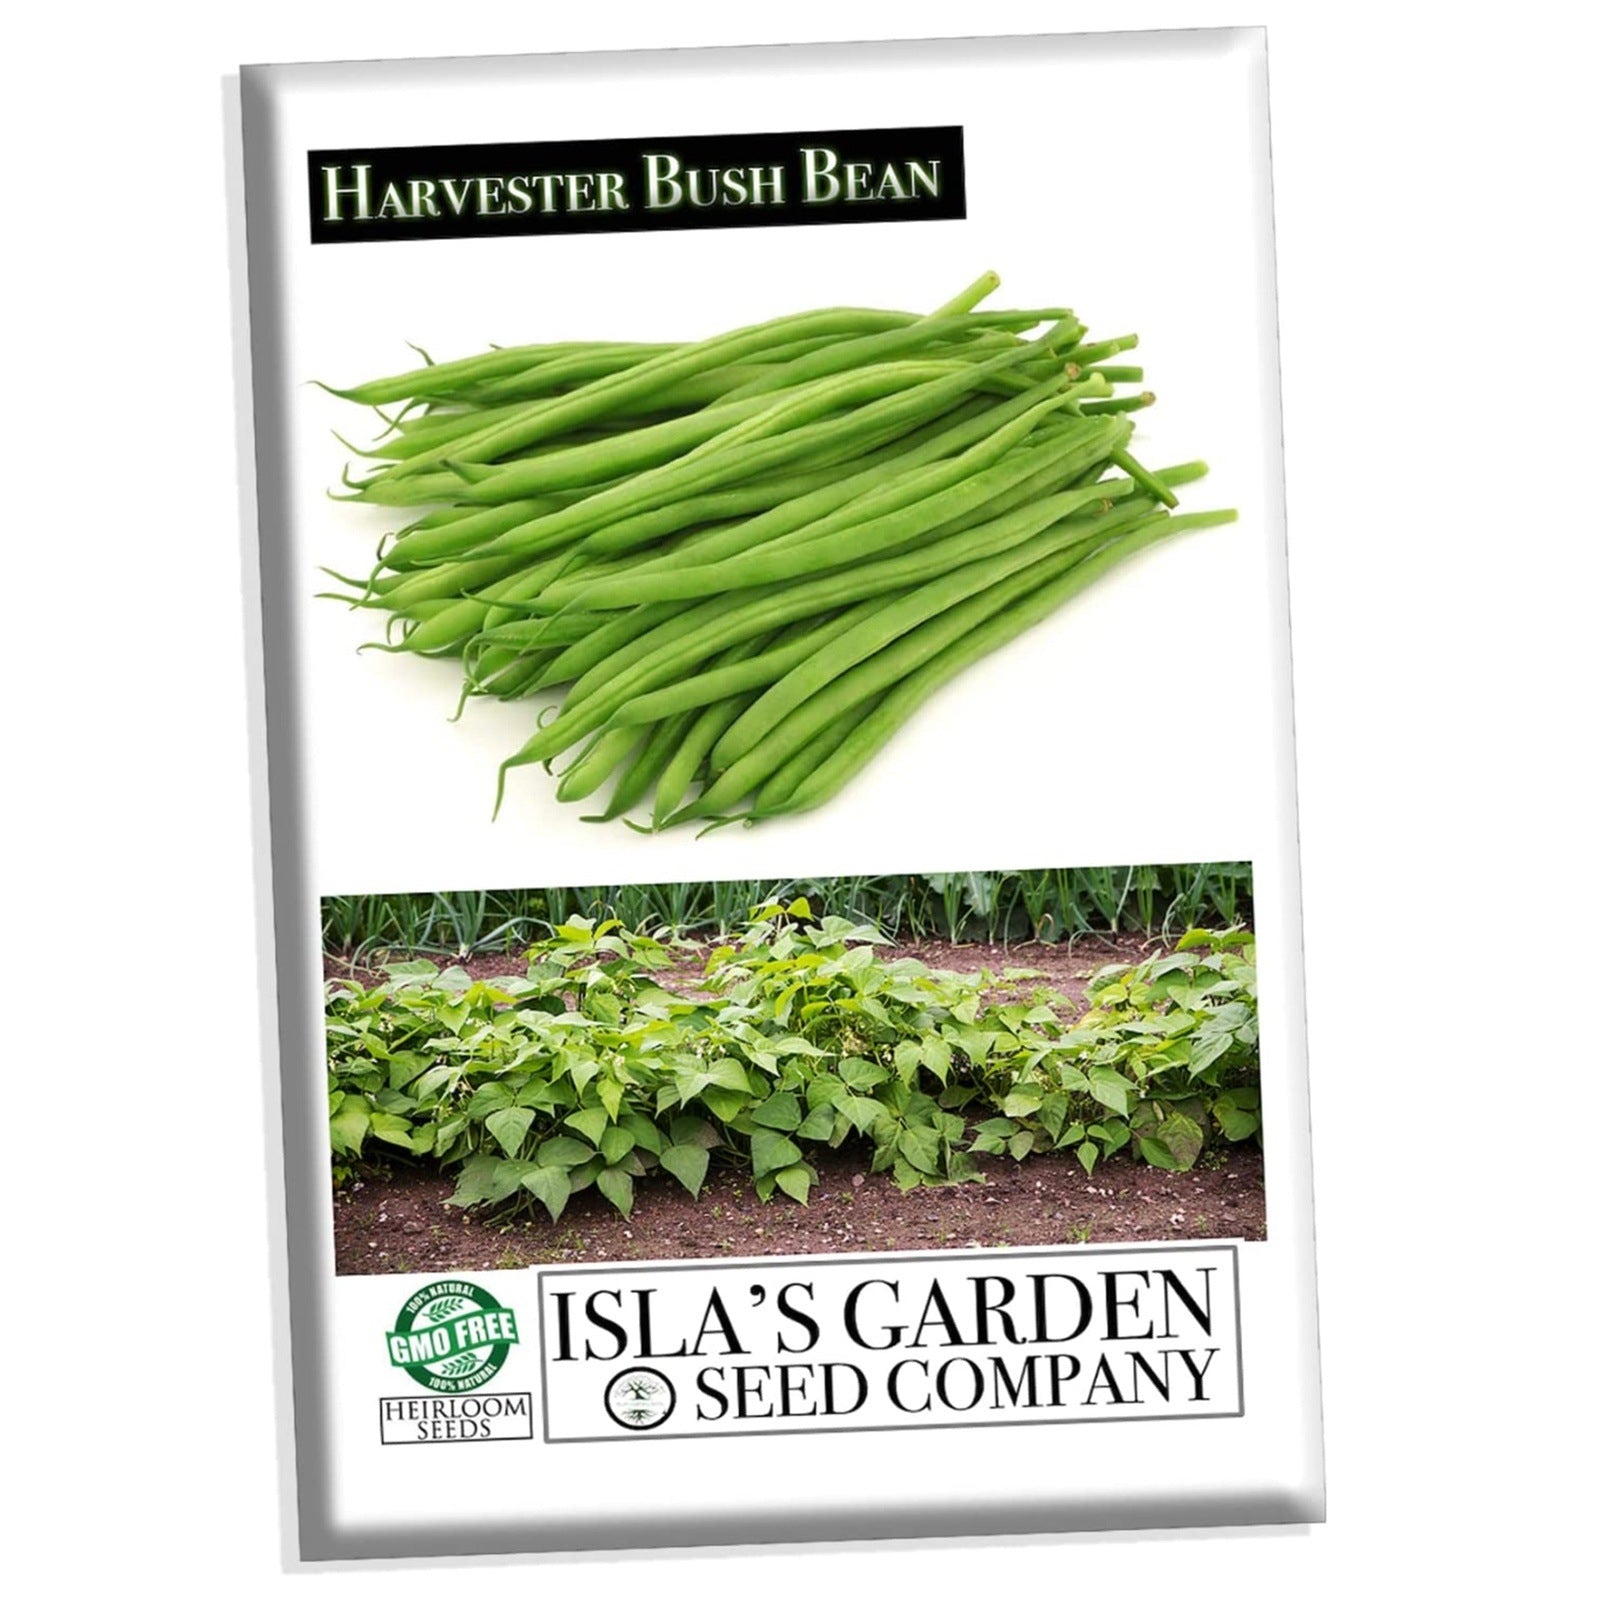 Harvester Bush Bean, 50 Heirloom Seeds Per Packet, Non GMO Seeds